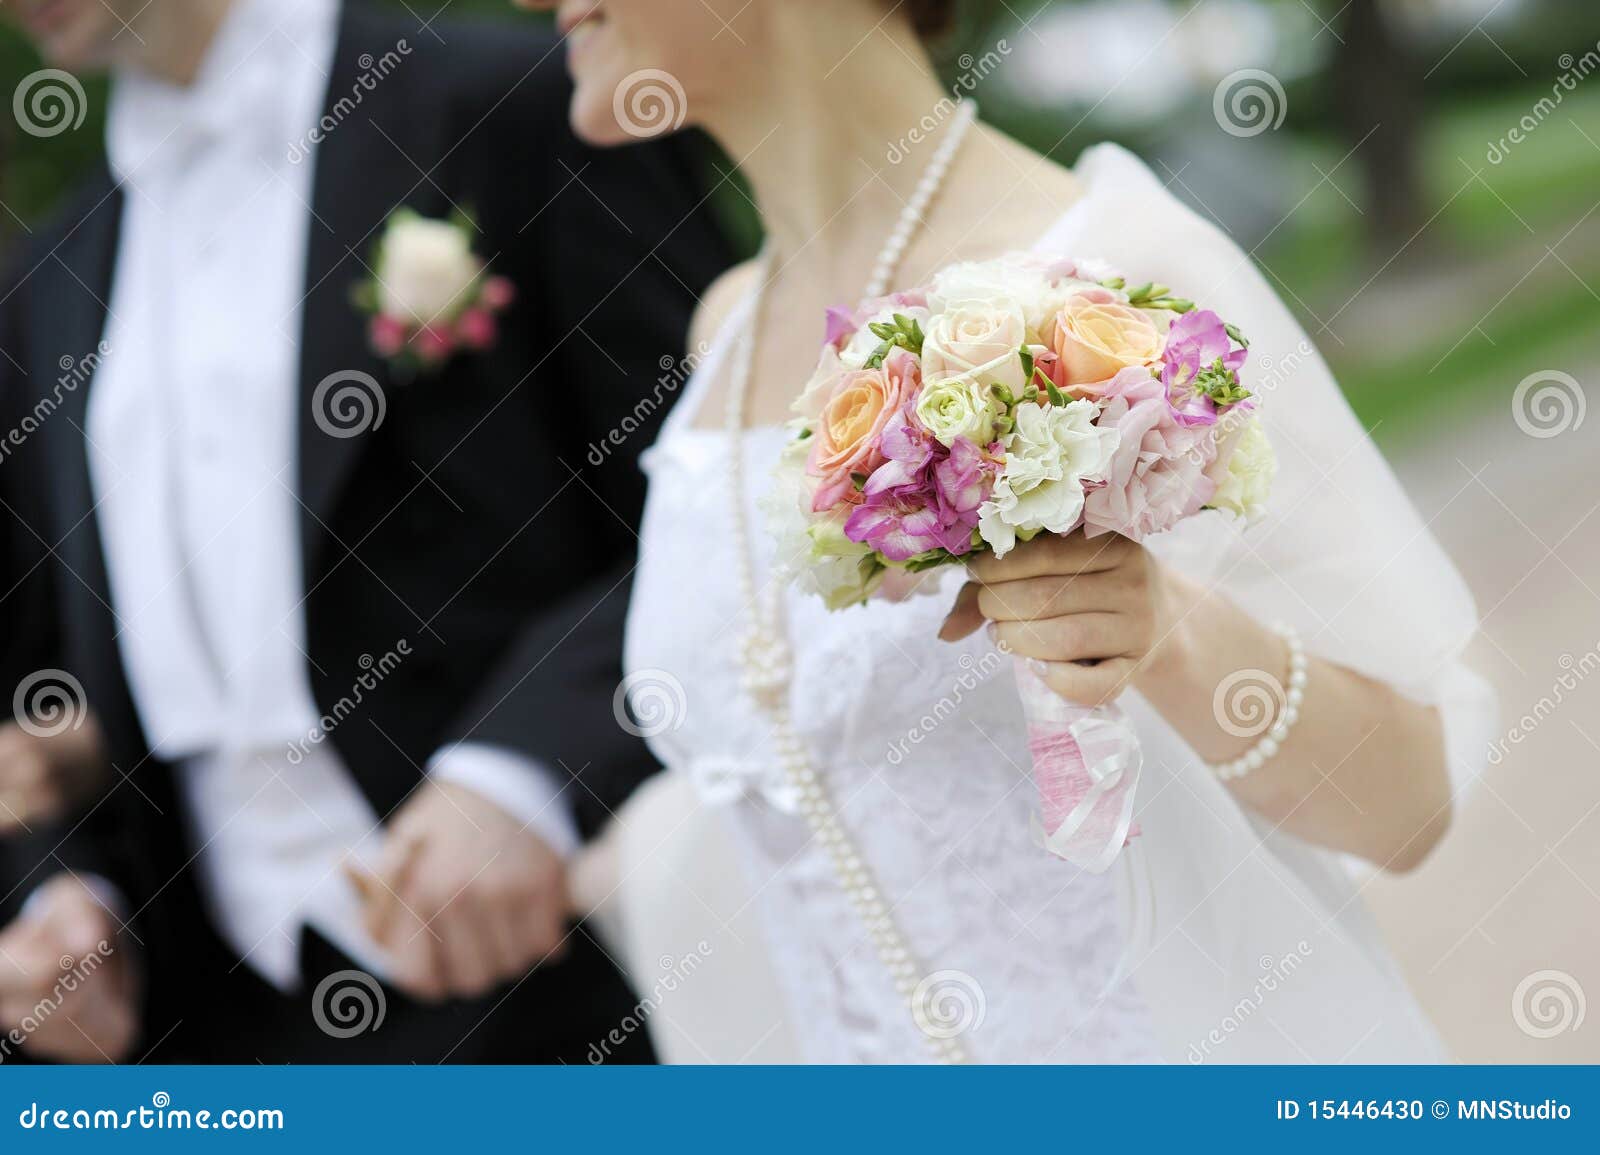 bride holding beautiful wedding flowers bouquet 15446430